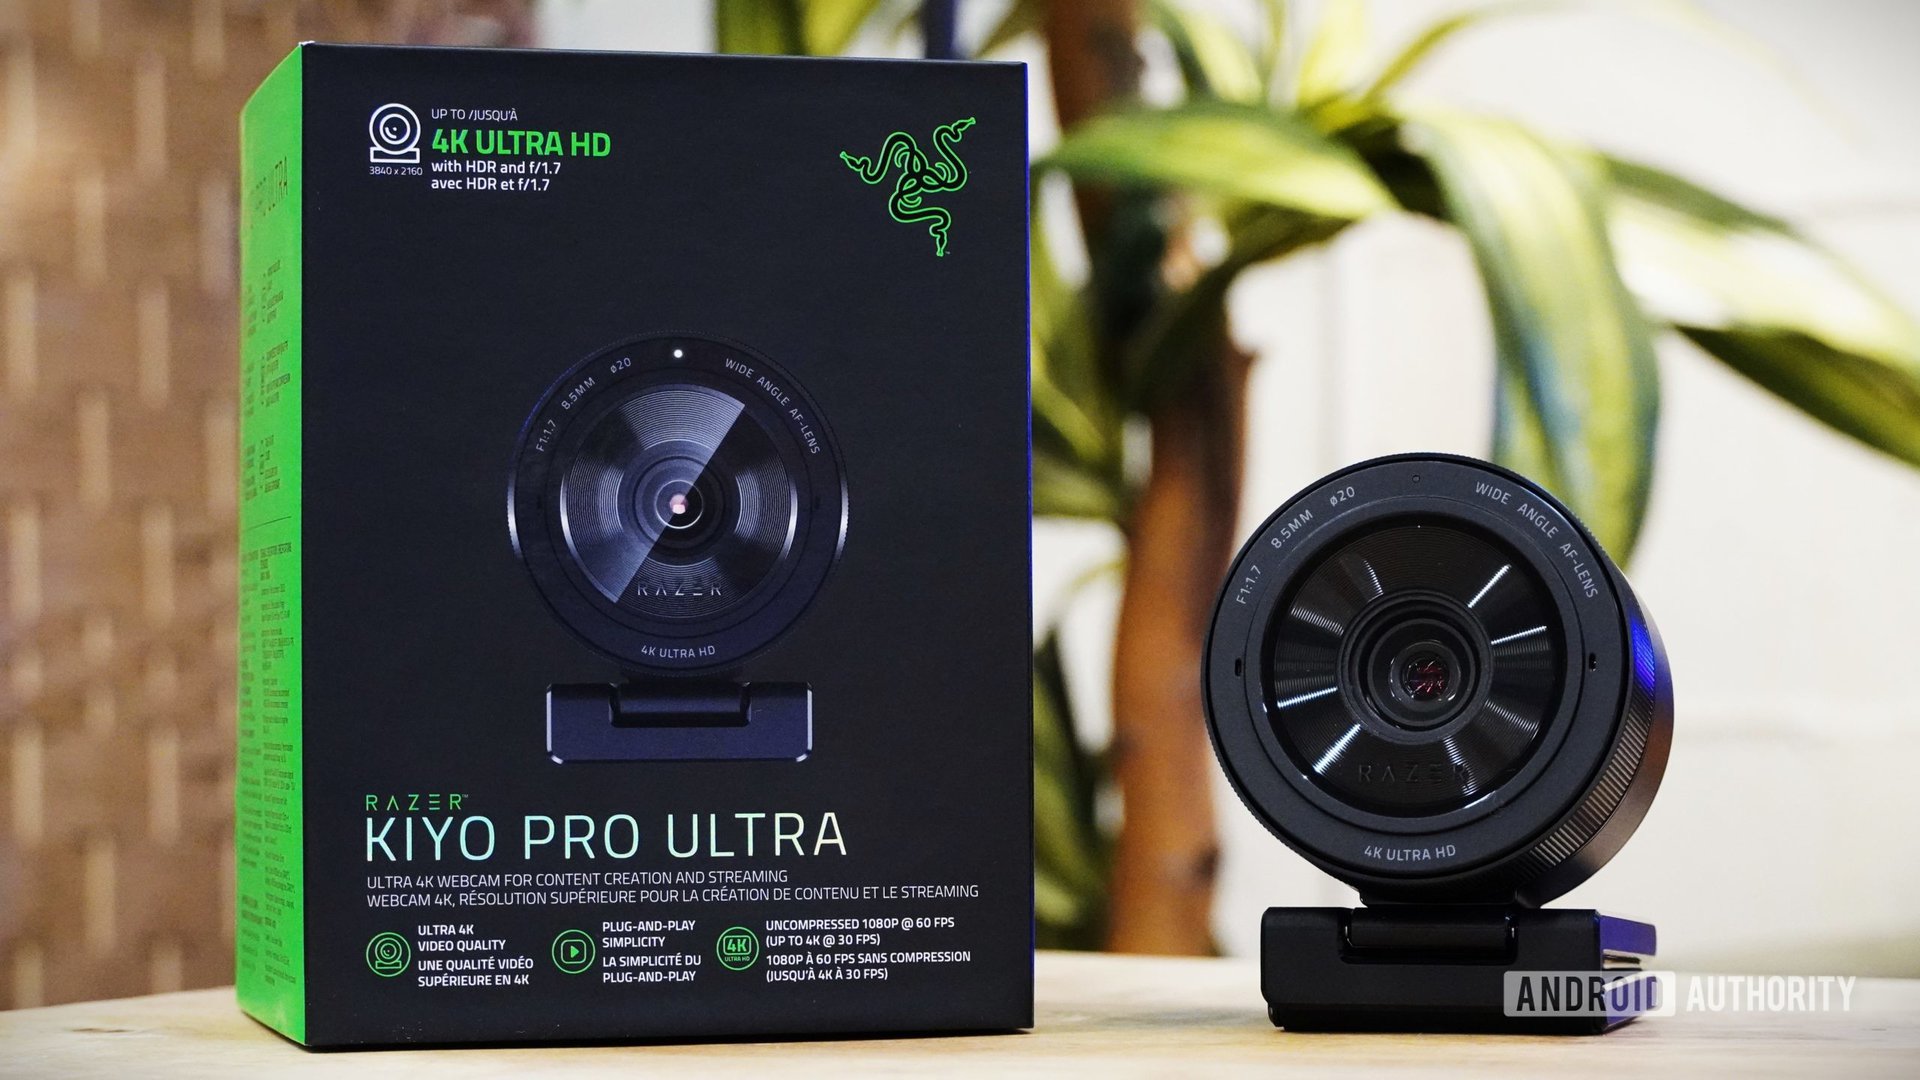 Razer Kiyo Pro Ultra review: The overkill king of 4K webcams